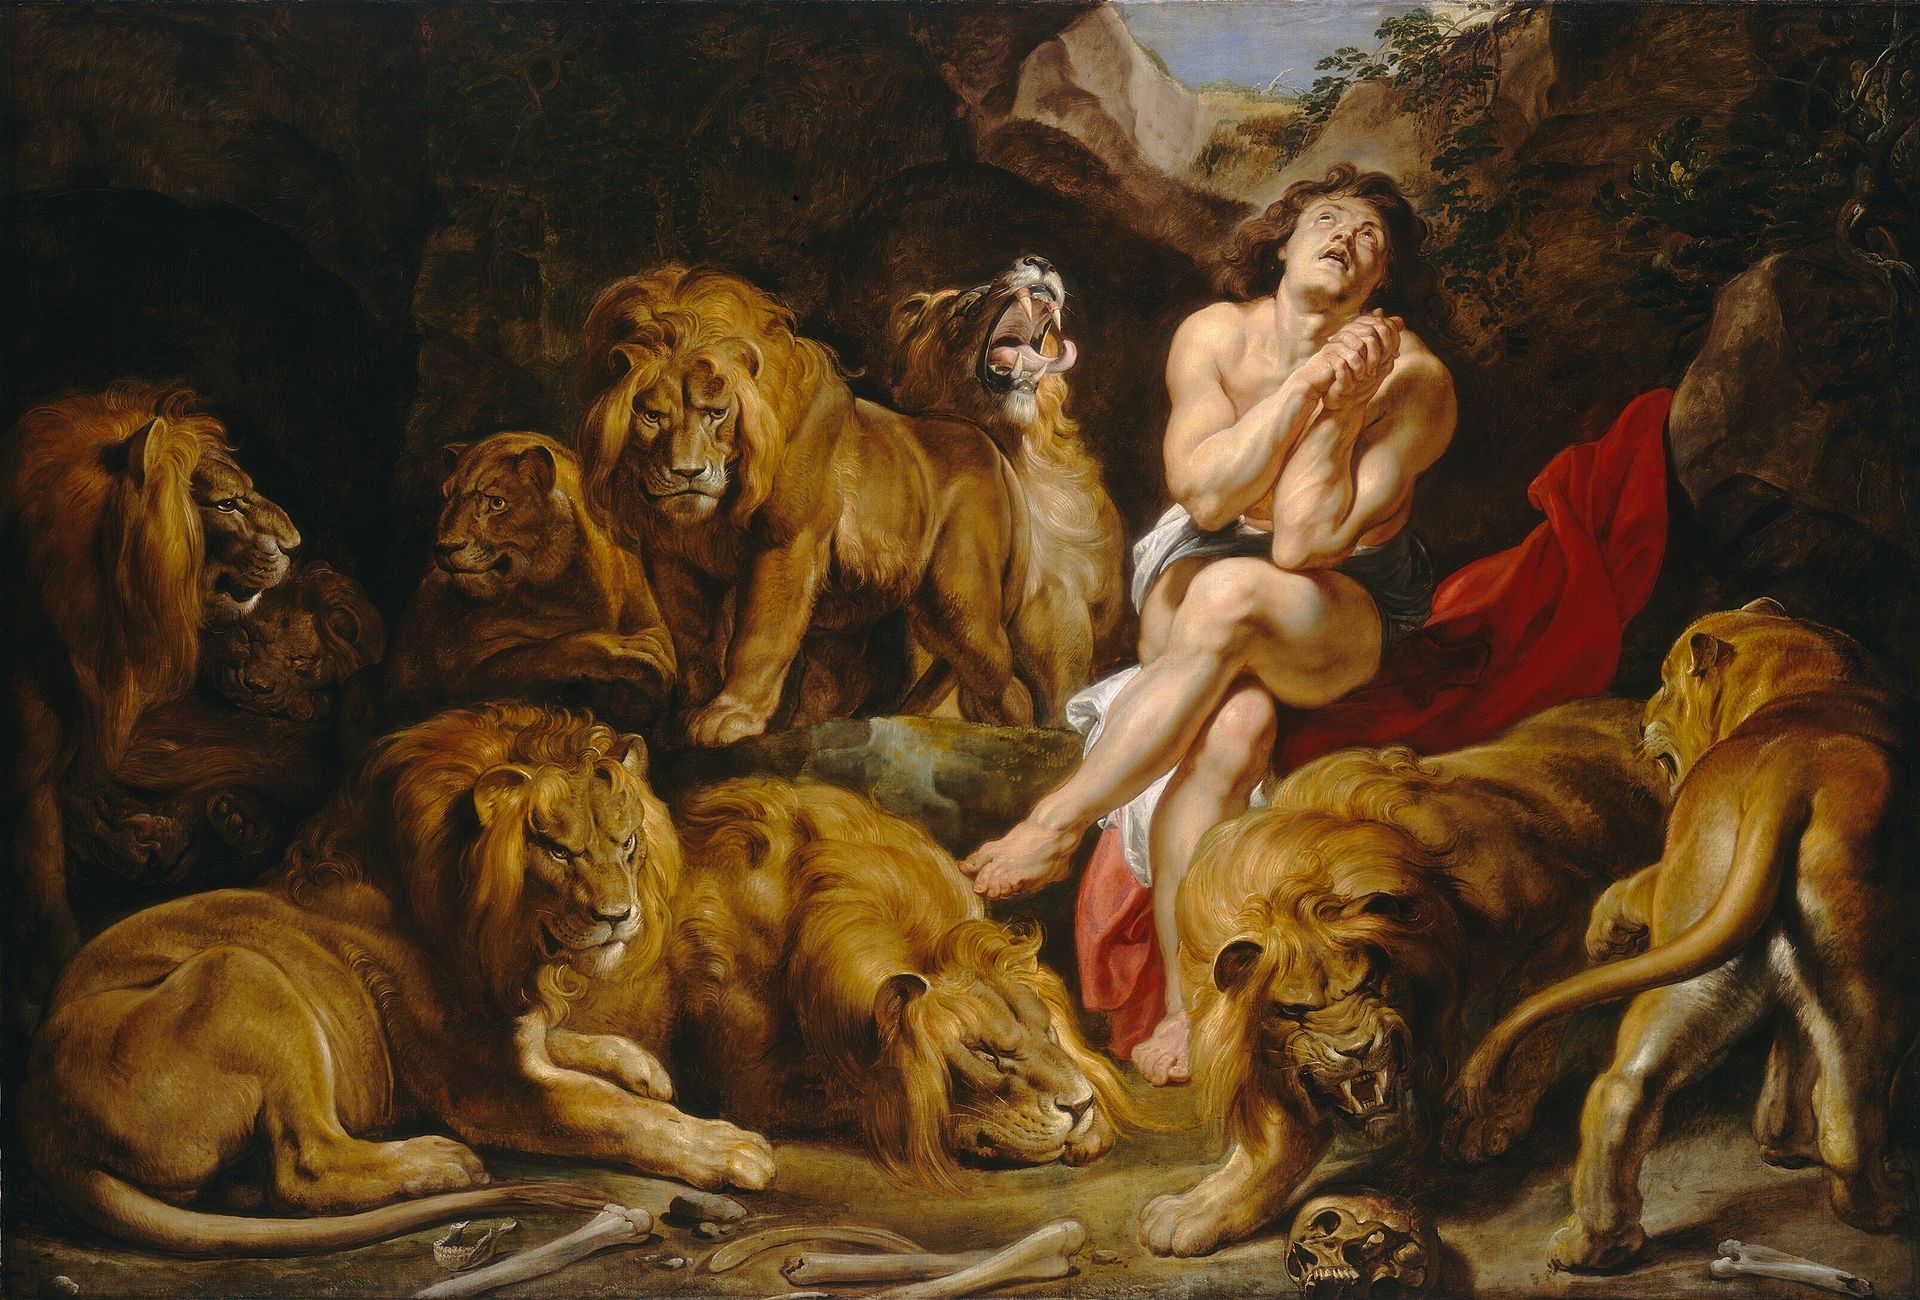 Daniel_in_the_Lion's_Den_c1615_Peter_Paul_Rubens, journal of wild culture, ©2020